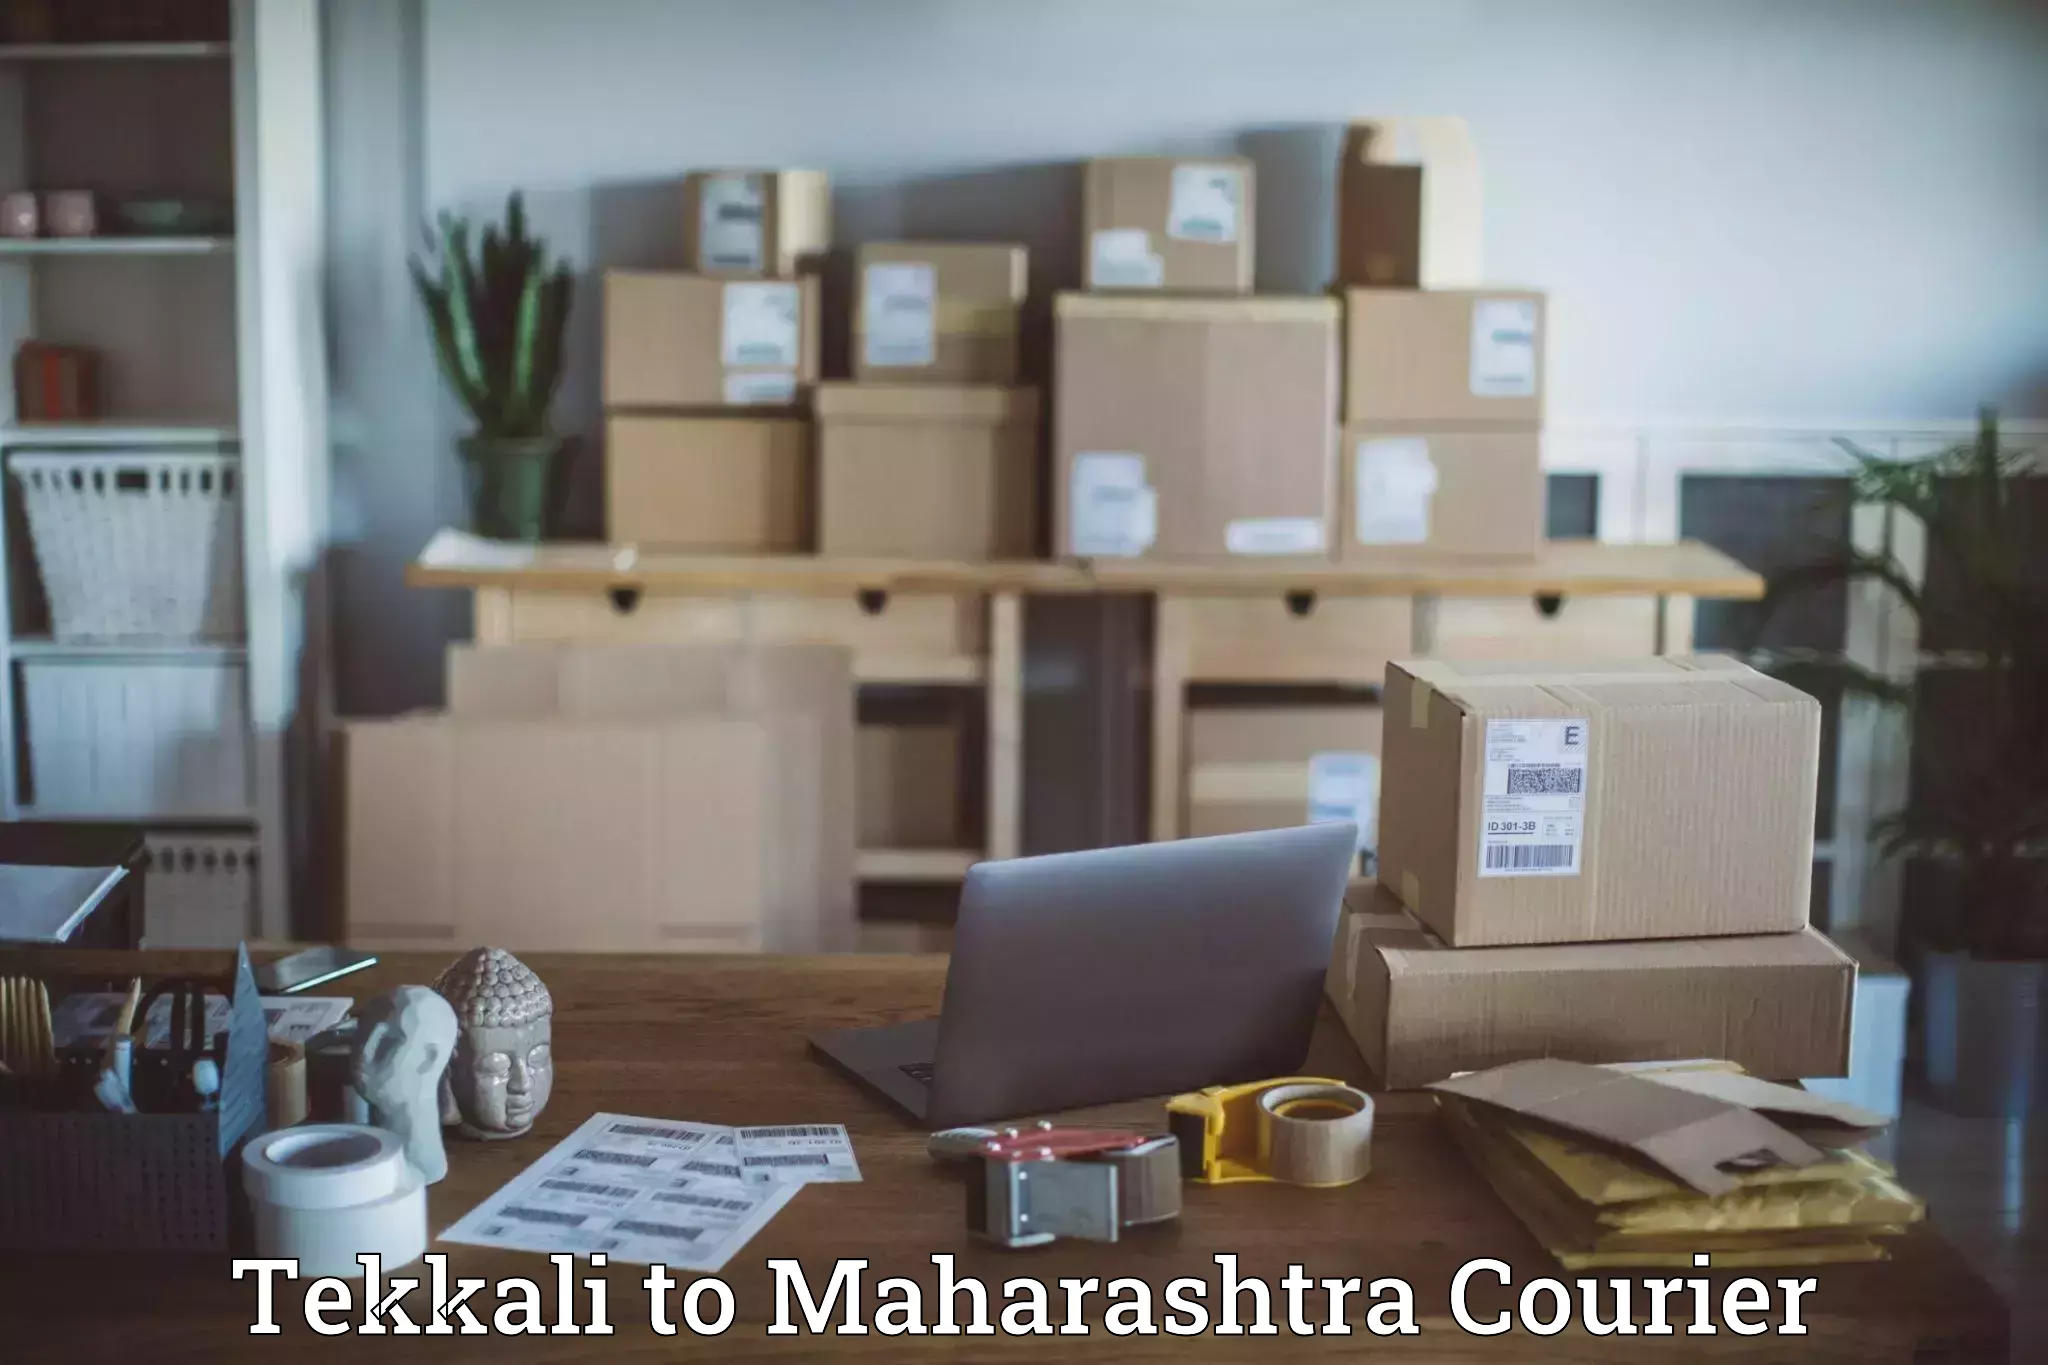 Express delivery network Tekkali to Mumbai